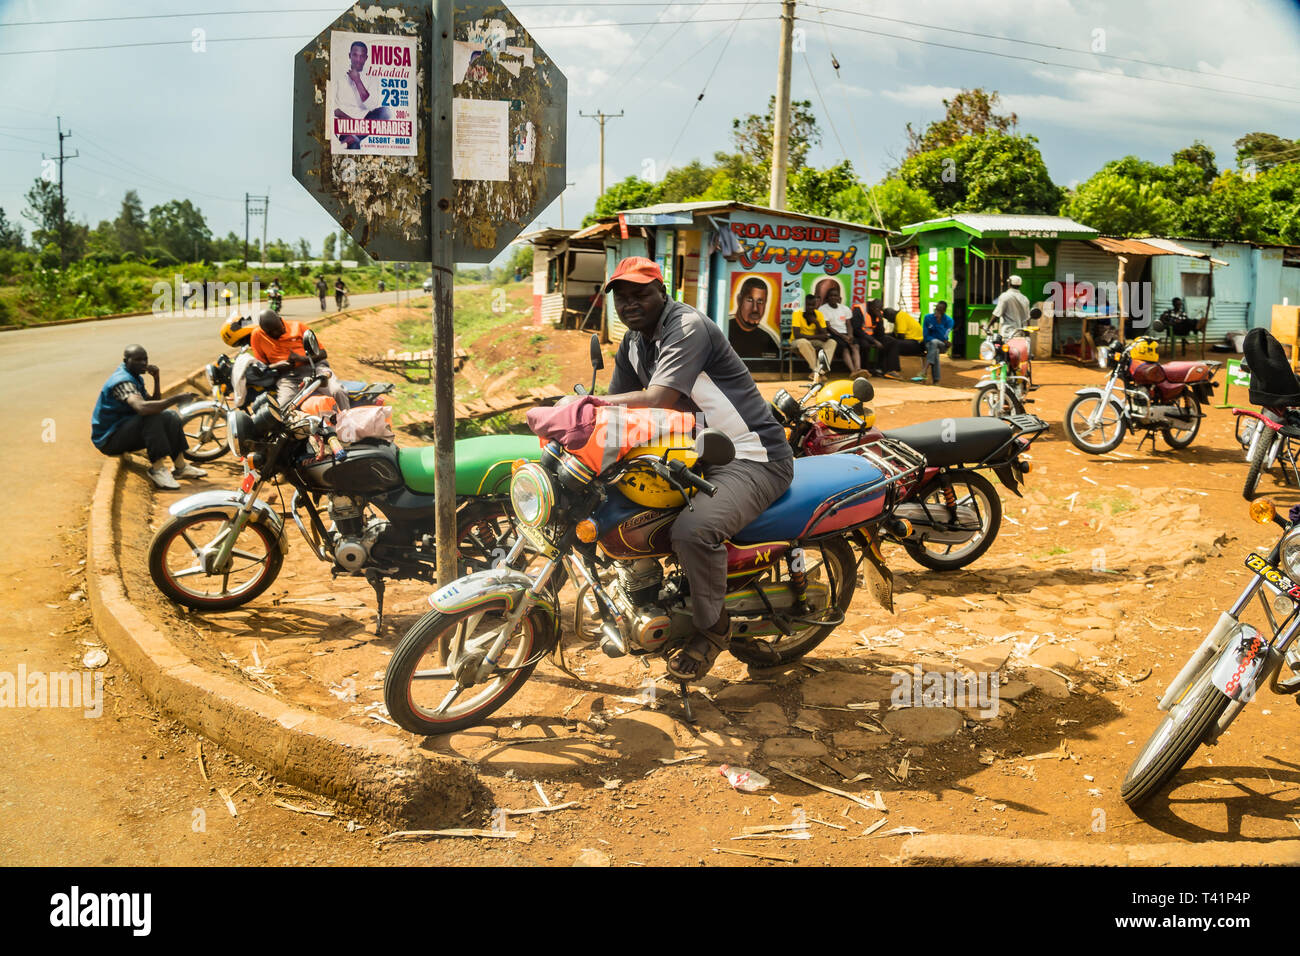 near Kisumu, Kenya - March 8, 2019 - Local Kenyan people near a small shop on the road Stock Photo